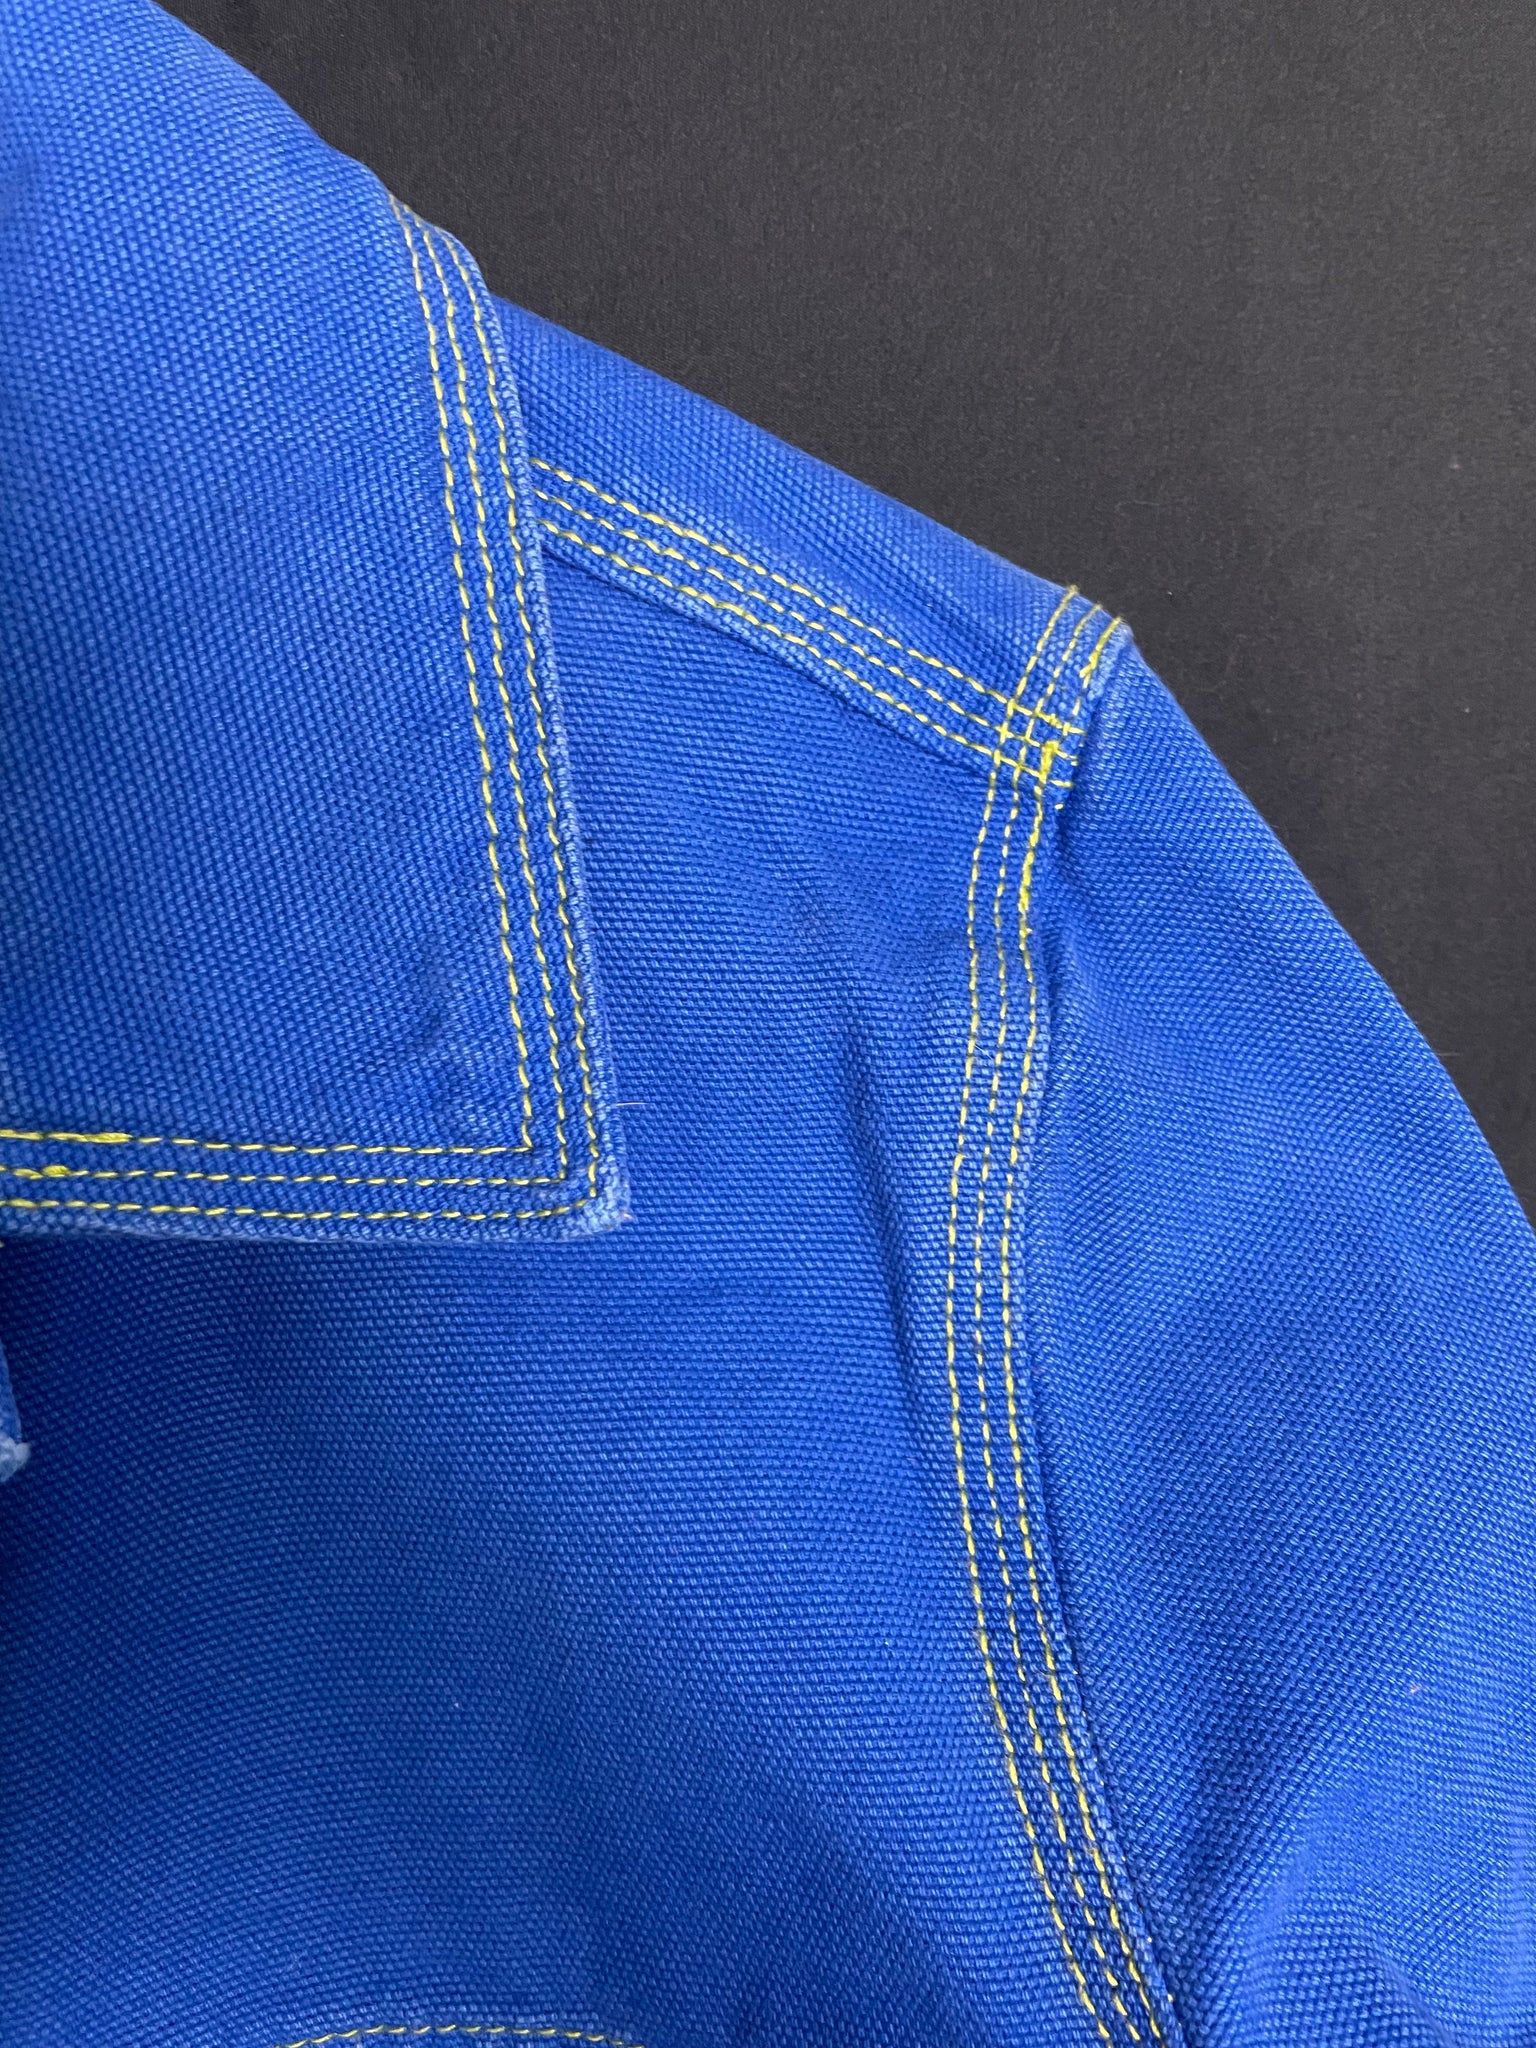 BDG blue cropped jacket, Size M